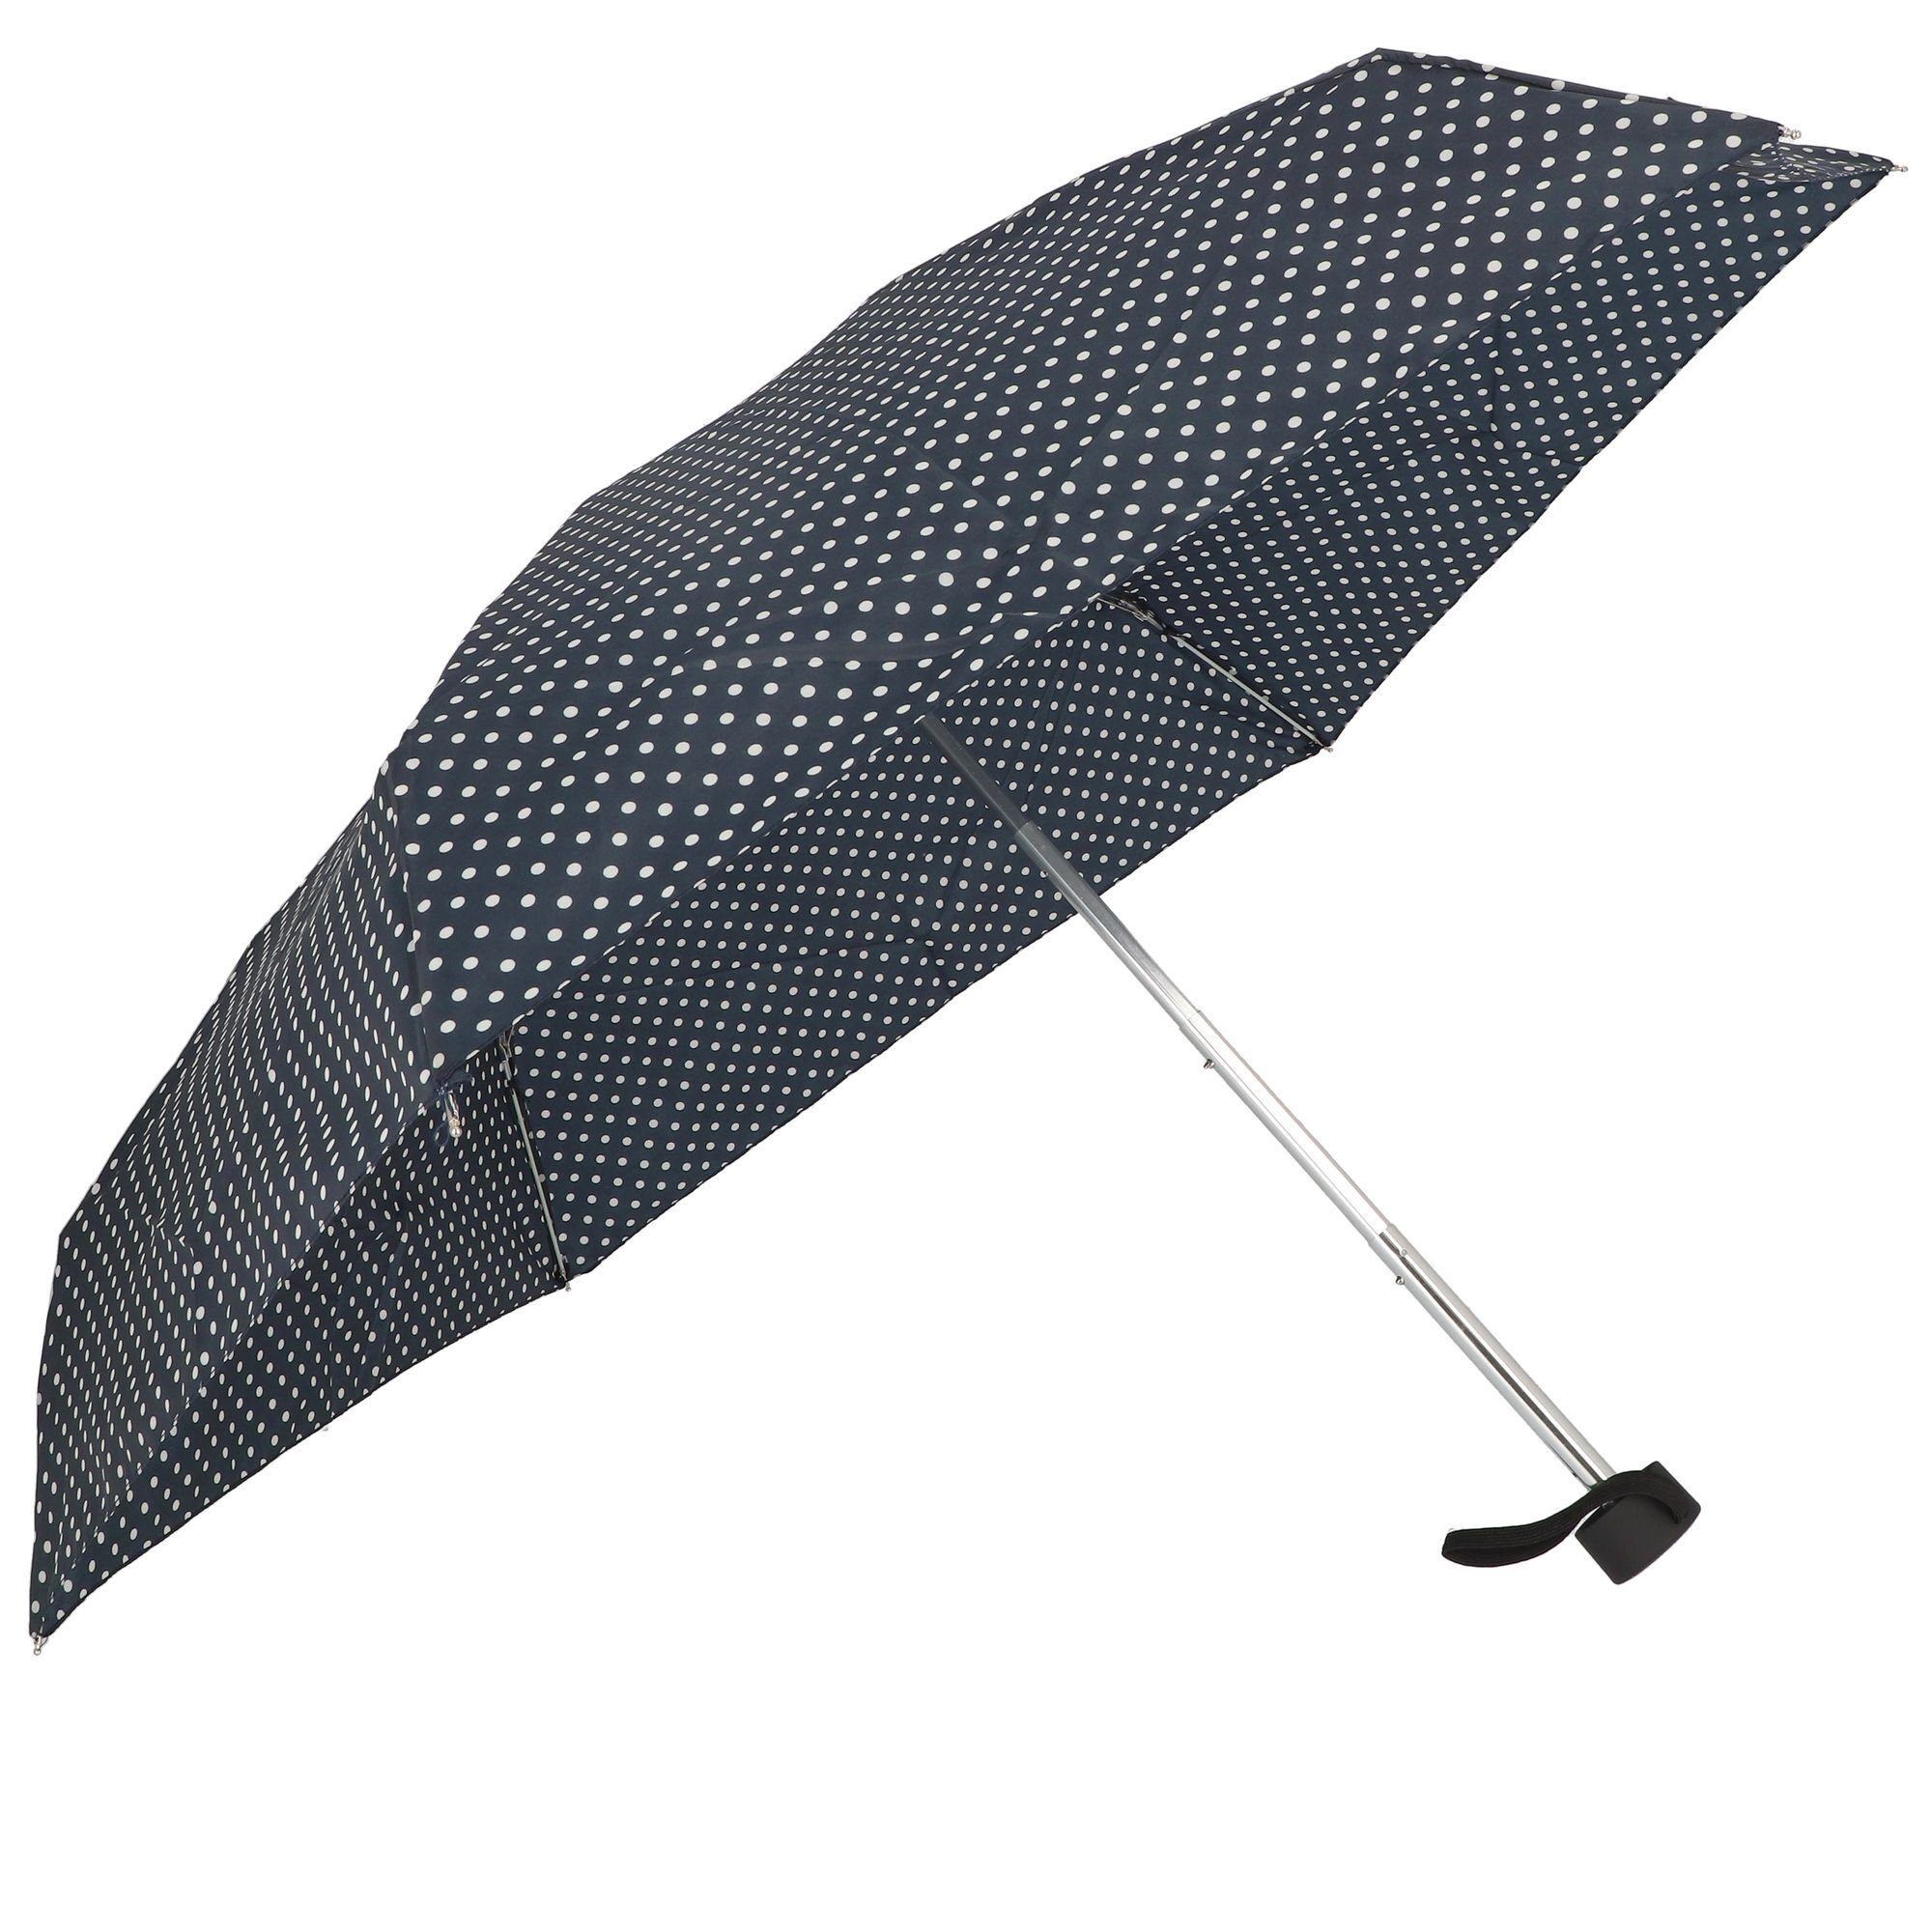 Stockregenschirm Tambrella, 93cm Tamaris